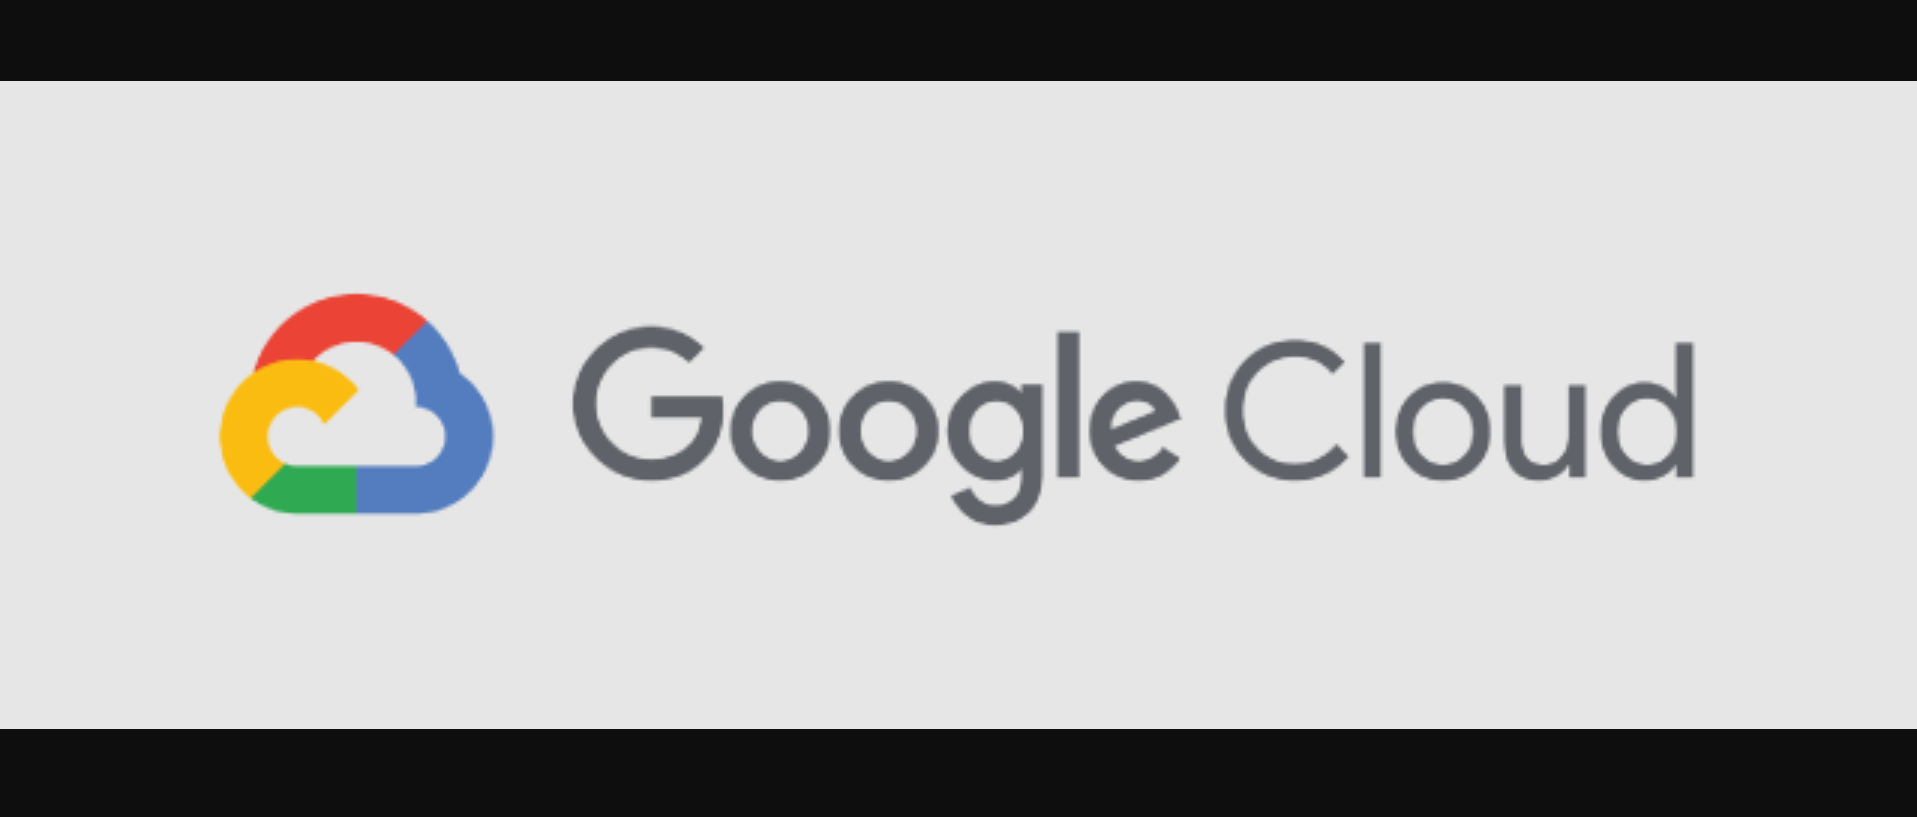 Google Cloud lança plataforma exclusiva de gerenciamento de IA